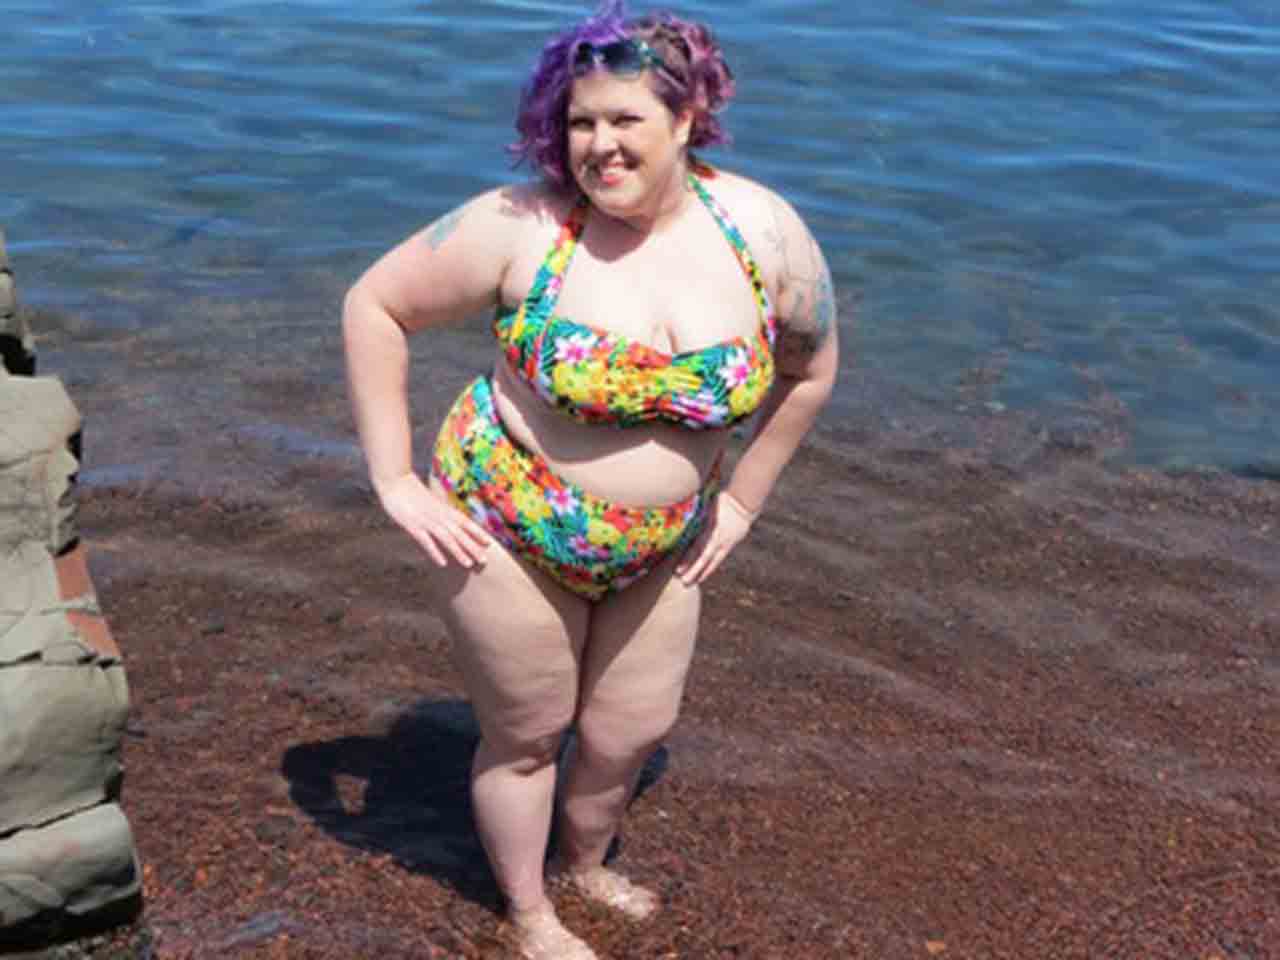 carolyn arellano recommends chubby women bikinis pic